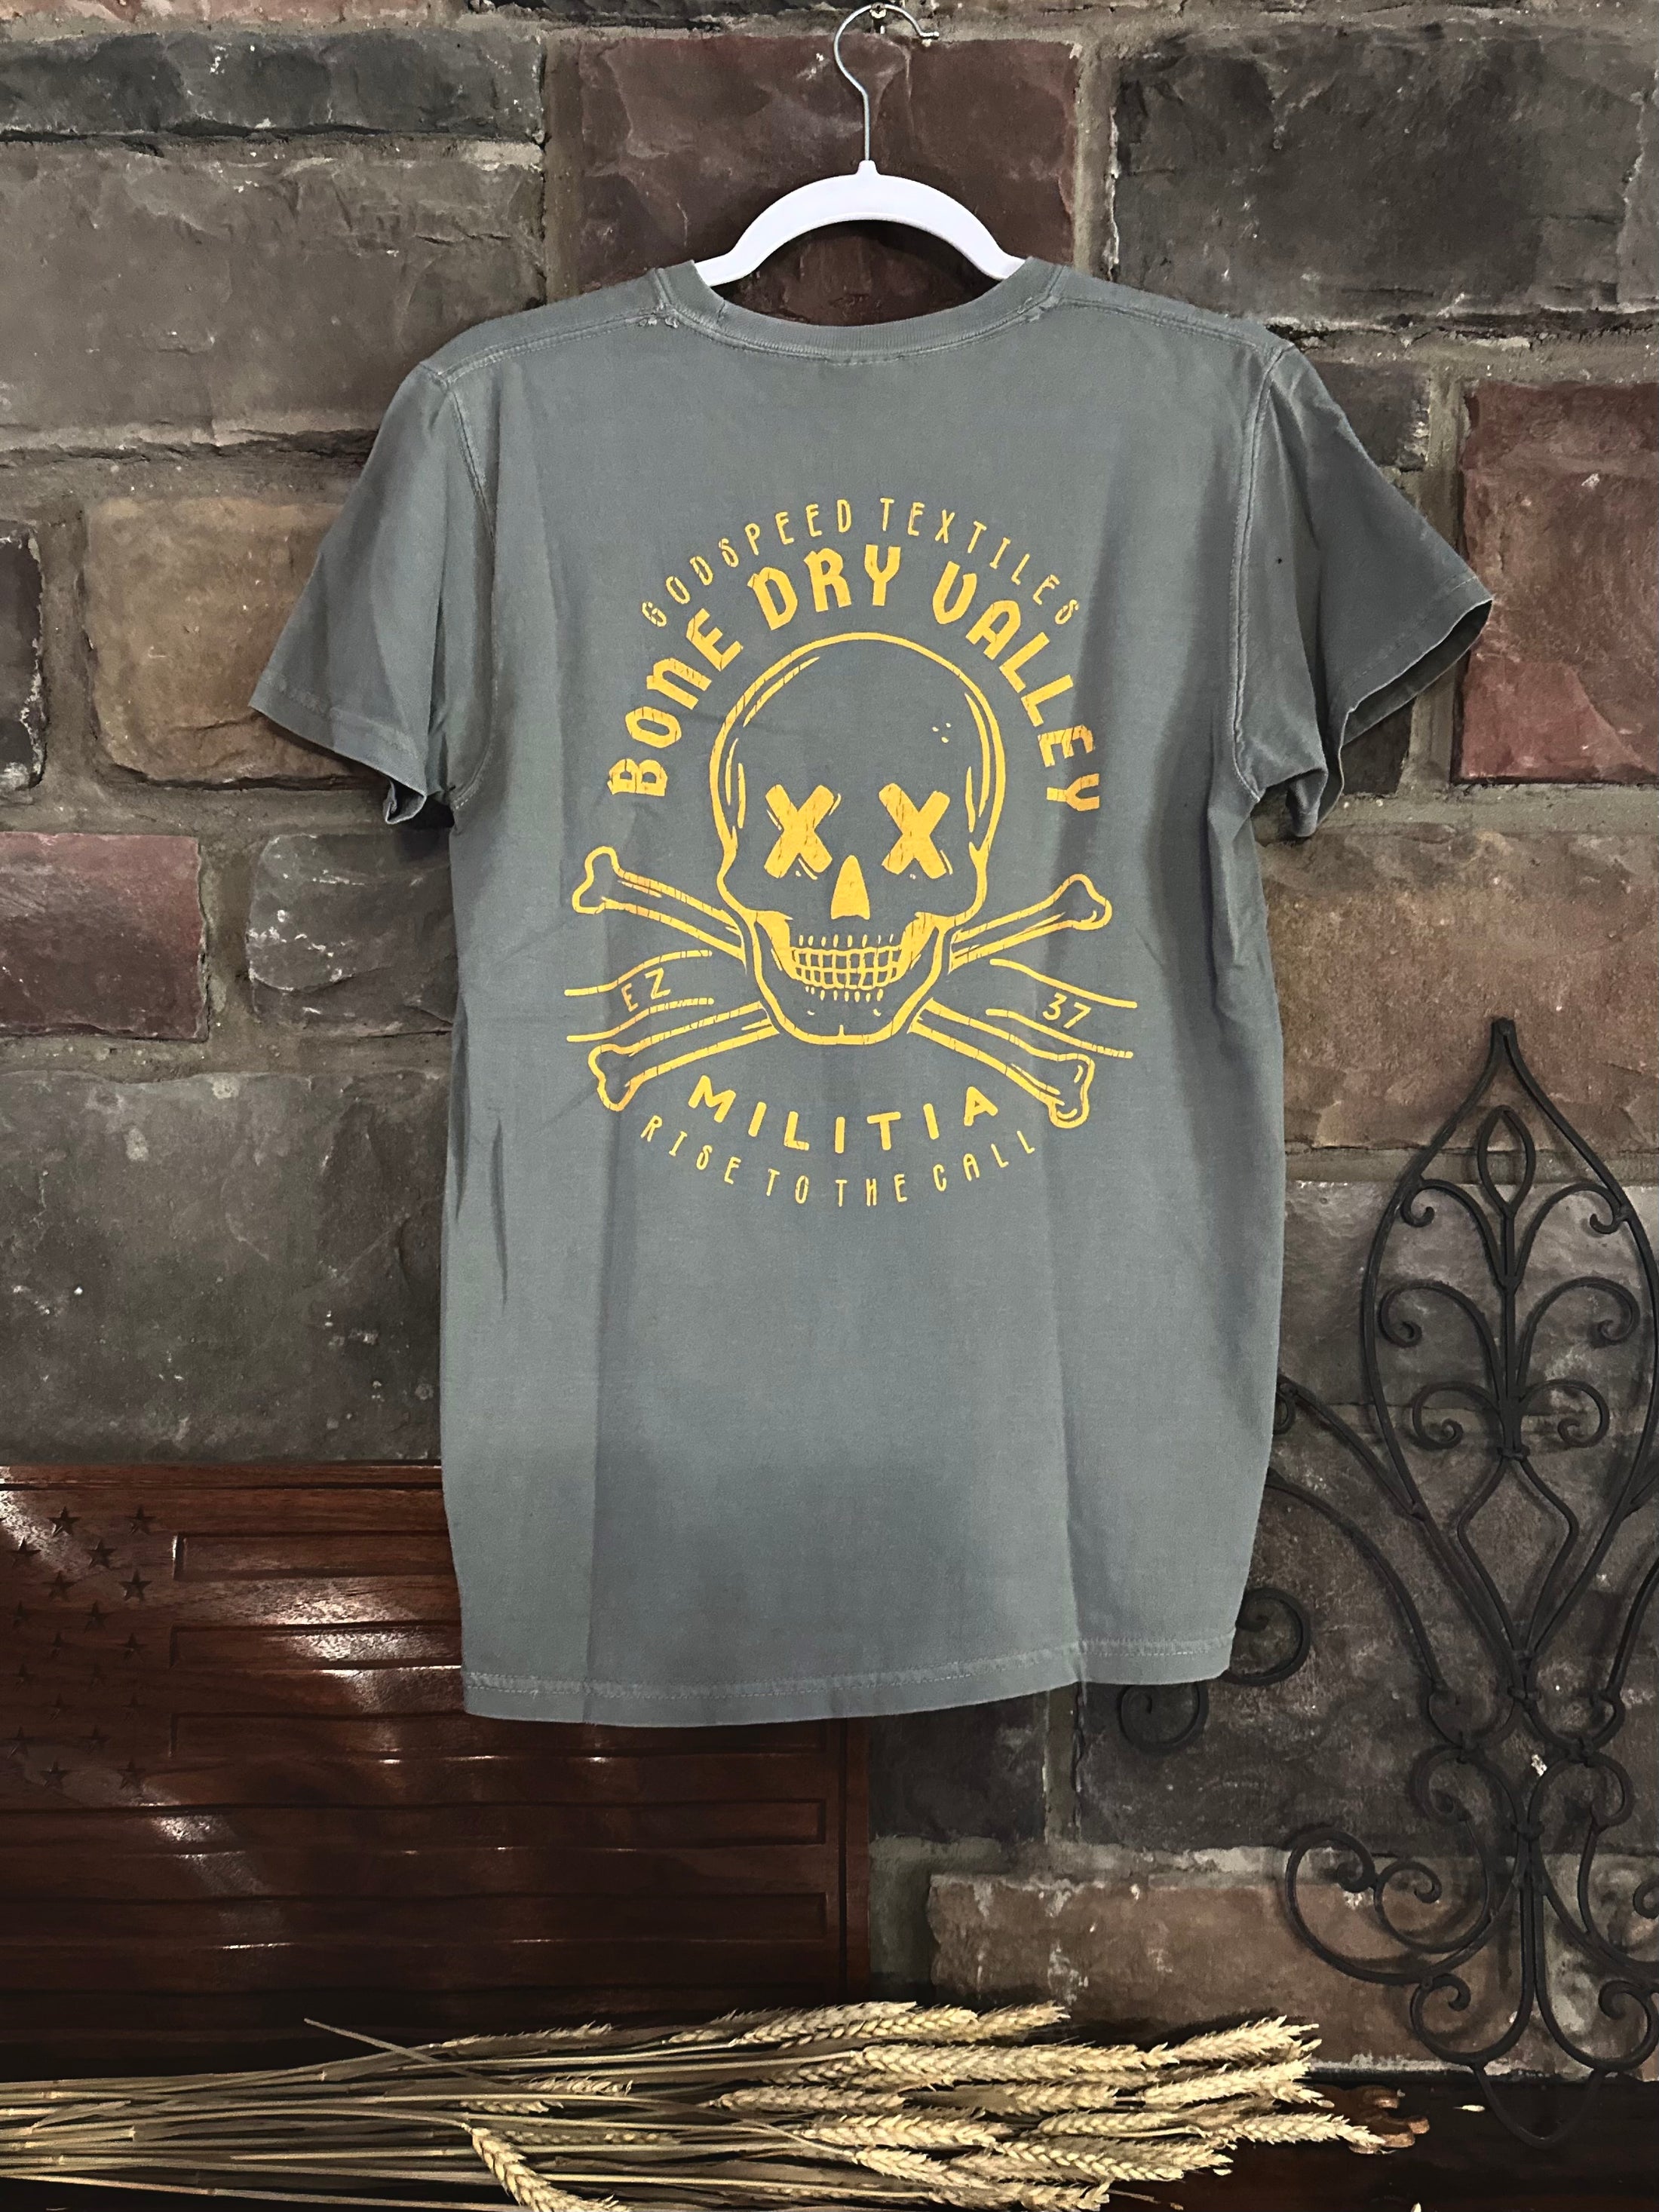 Godspeed Textiles "Bone Dry Valley" Unisex T-Shirt